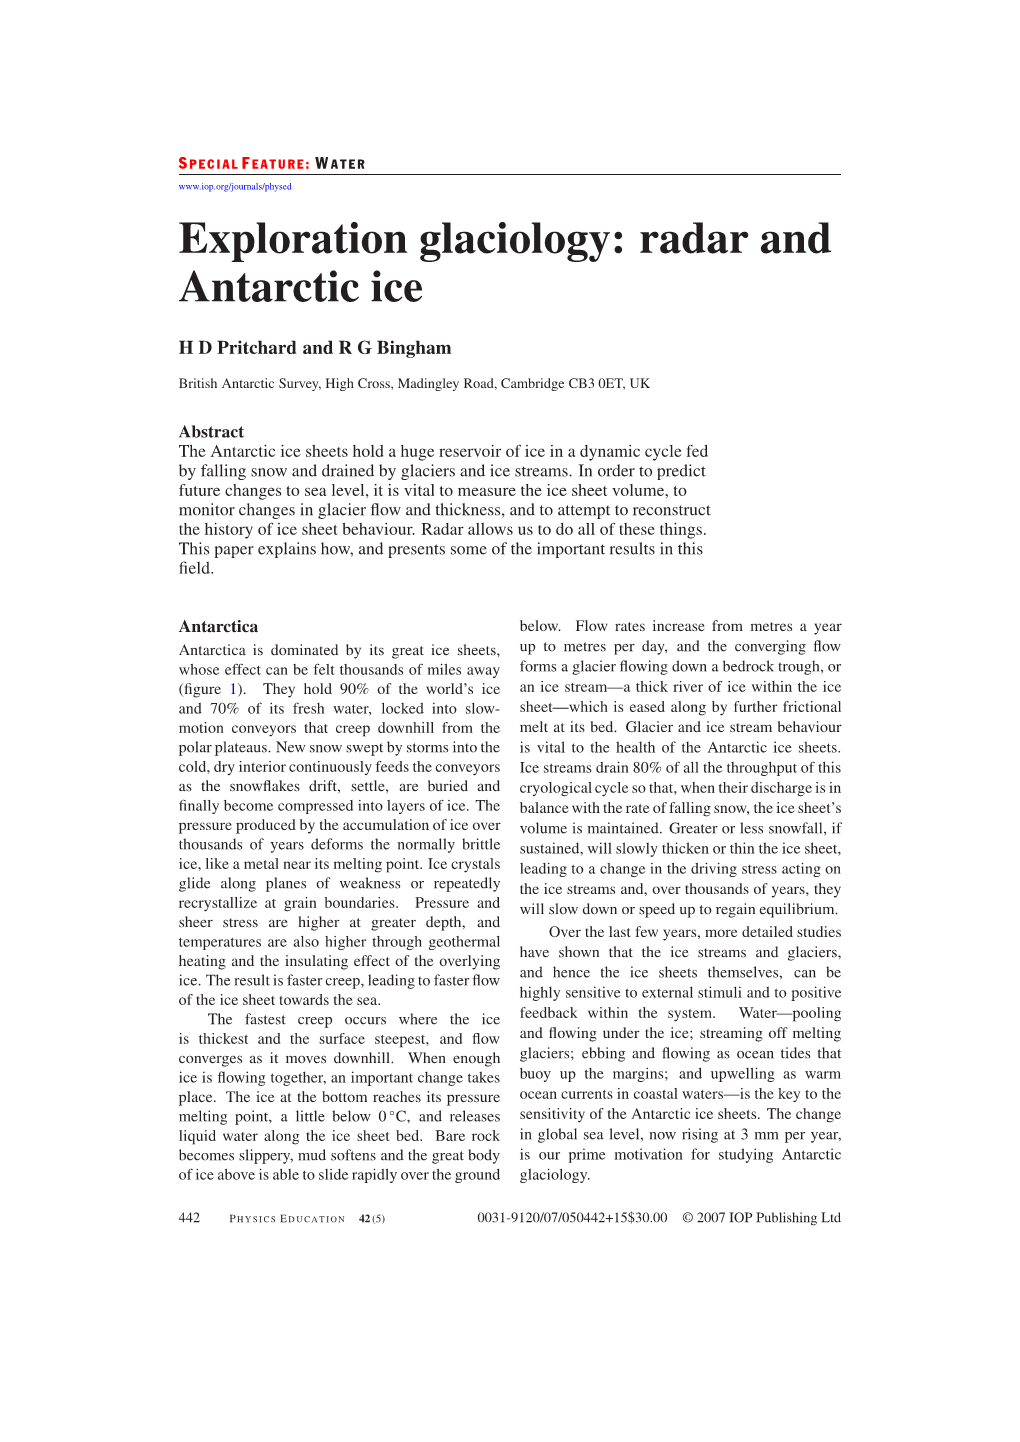 Exploration Glaciology: Radar and Antarctic Ice